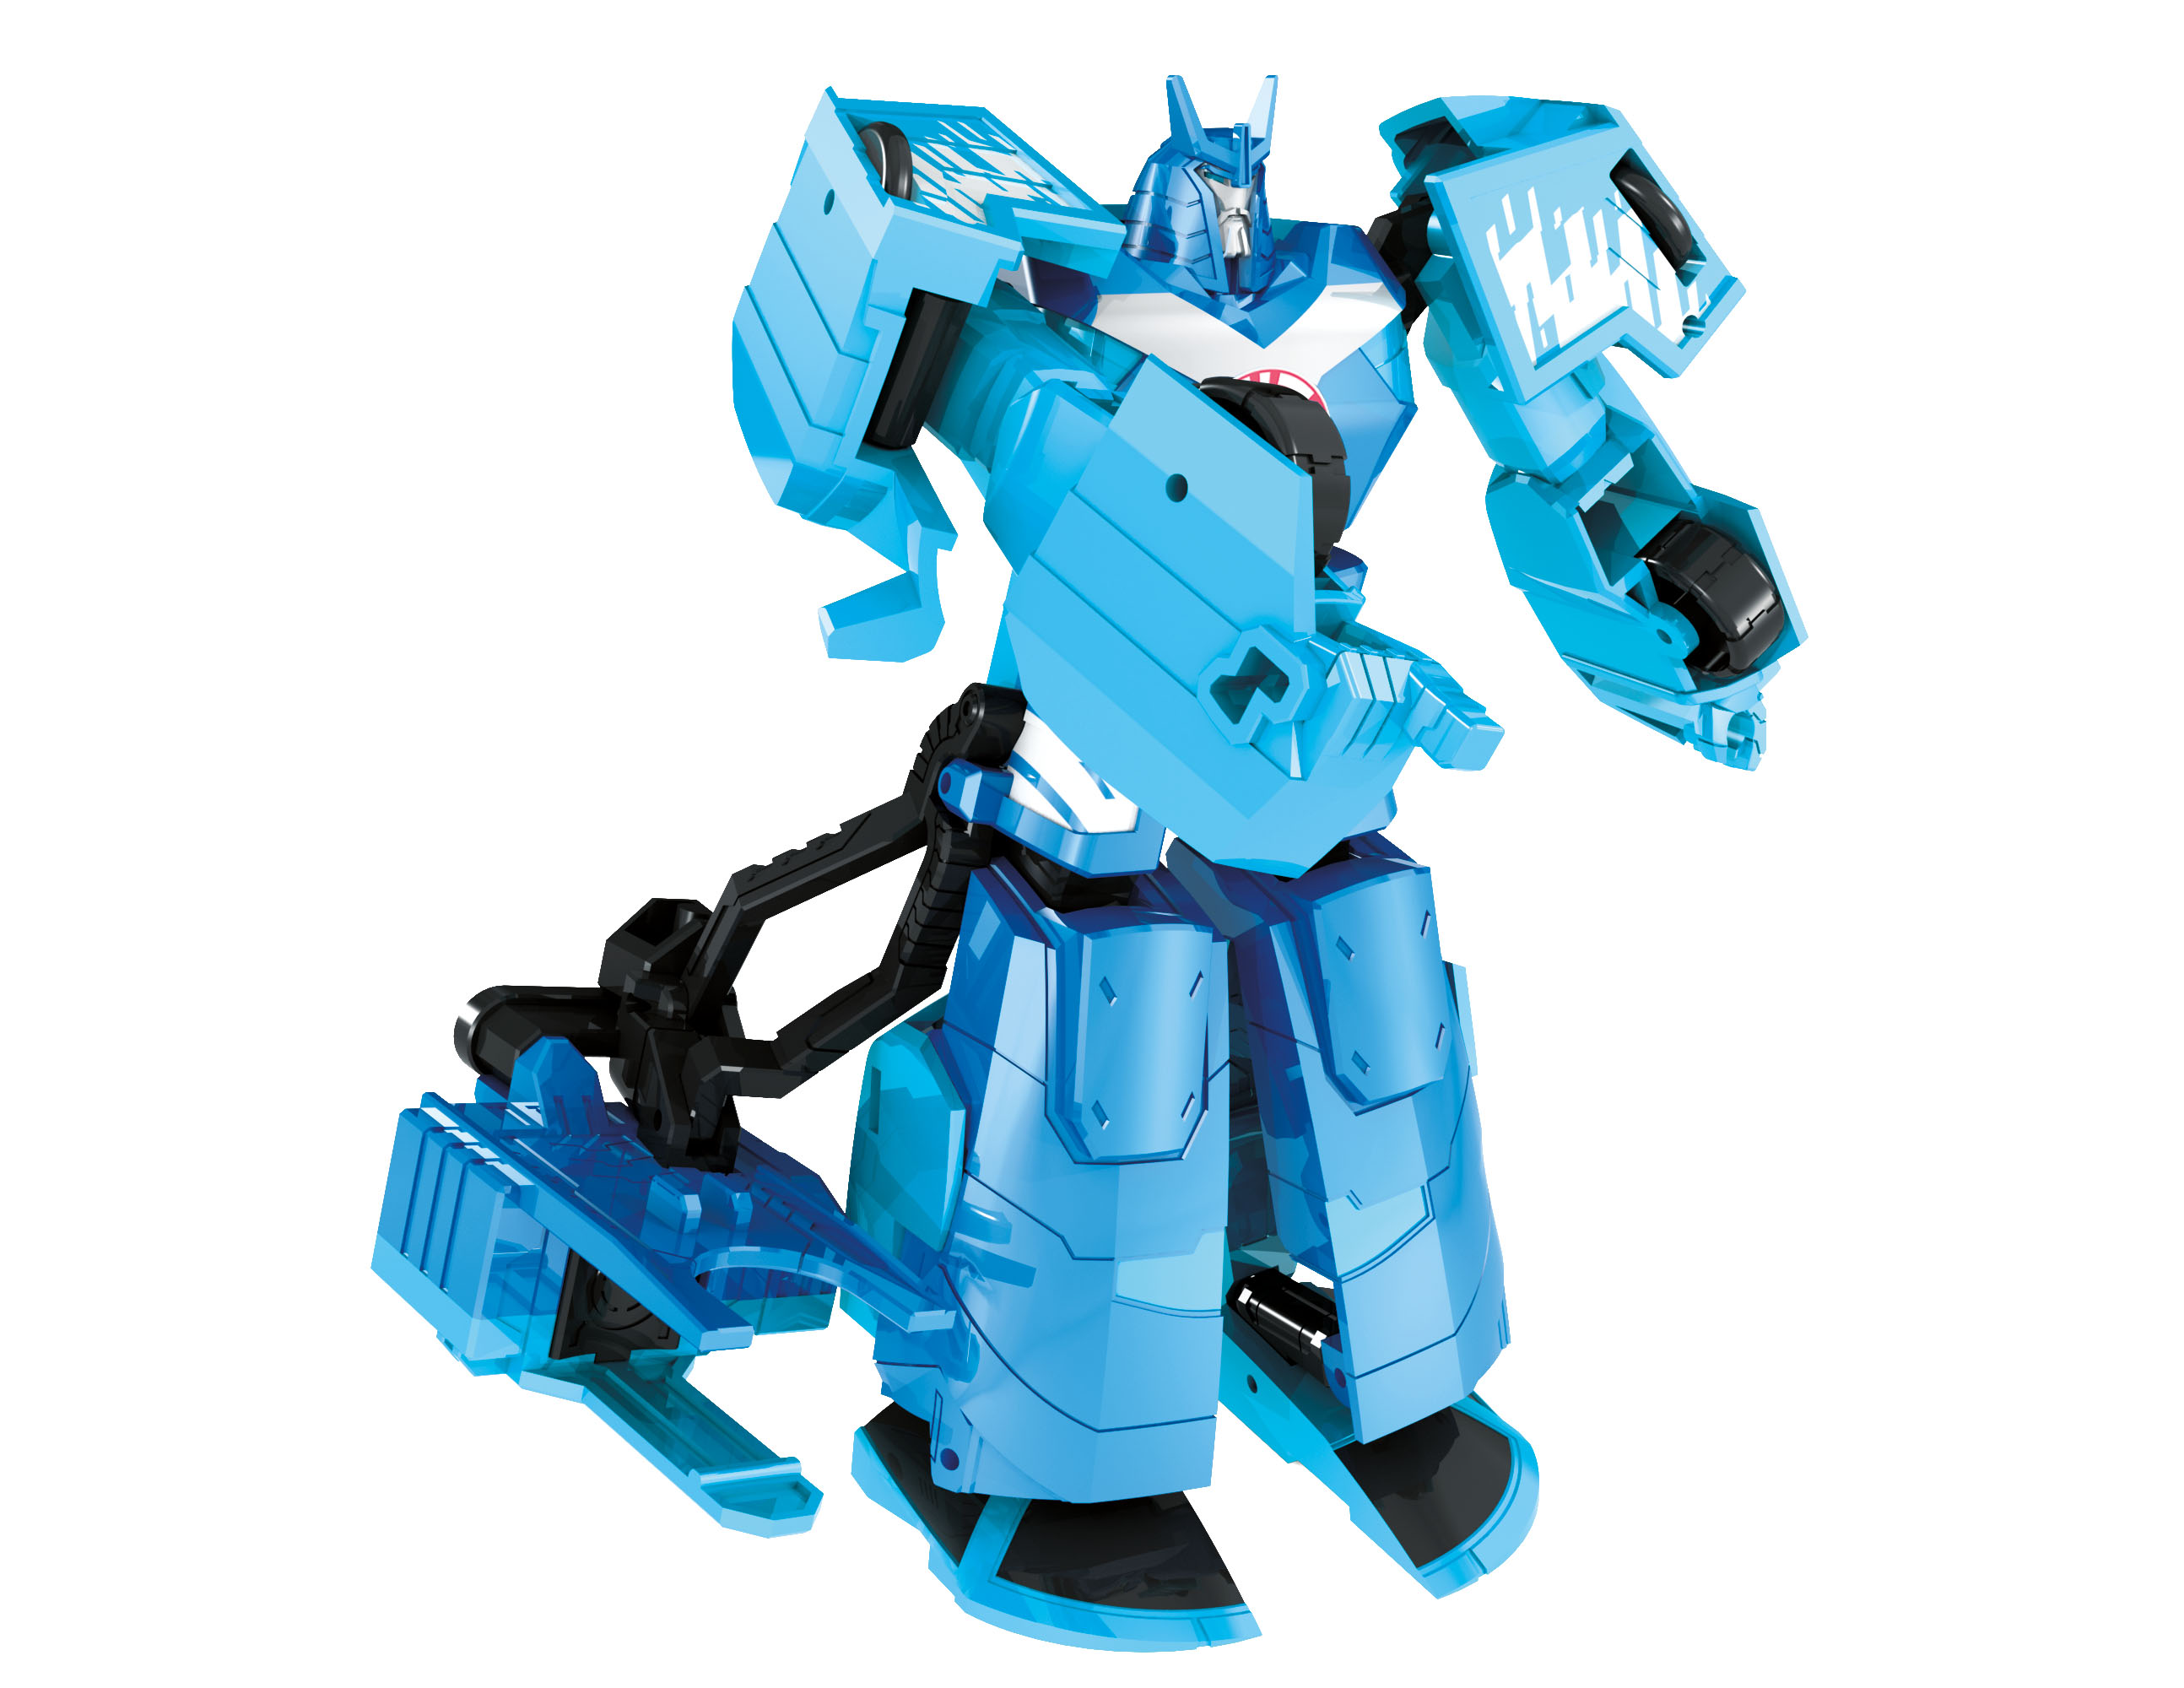 Transformers rid. Transformers Robots in Disguise дрифт. Transformers Robots in Disguise Drift. Transformers Robots in Disguise Takara Tomy. Миникон трансформер Velocirazor.